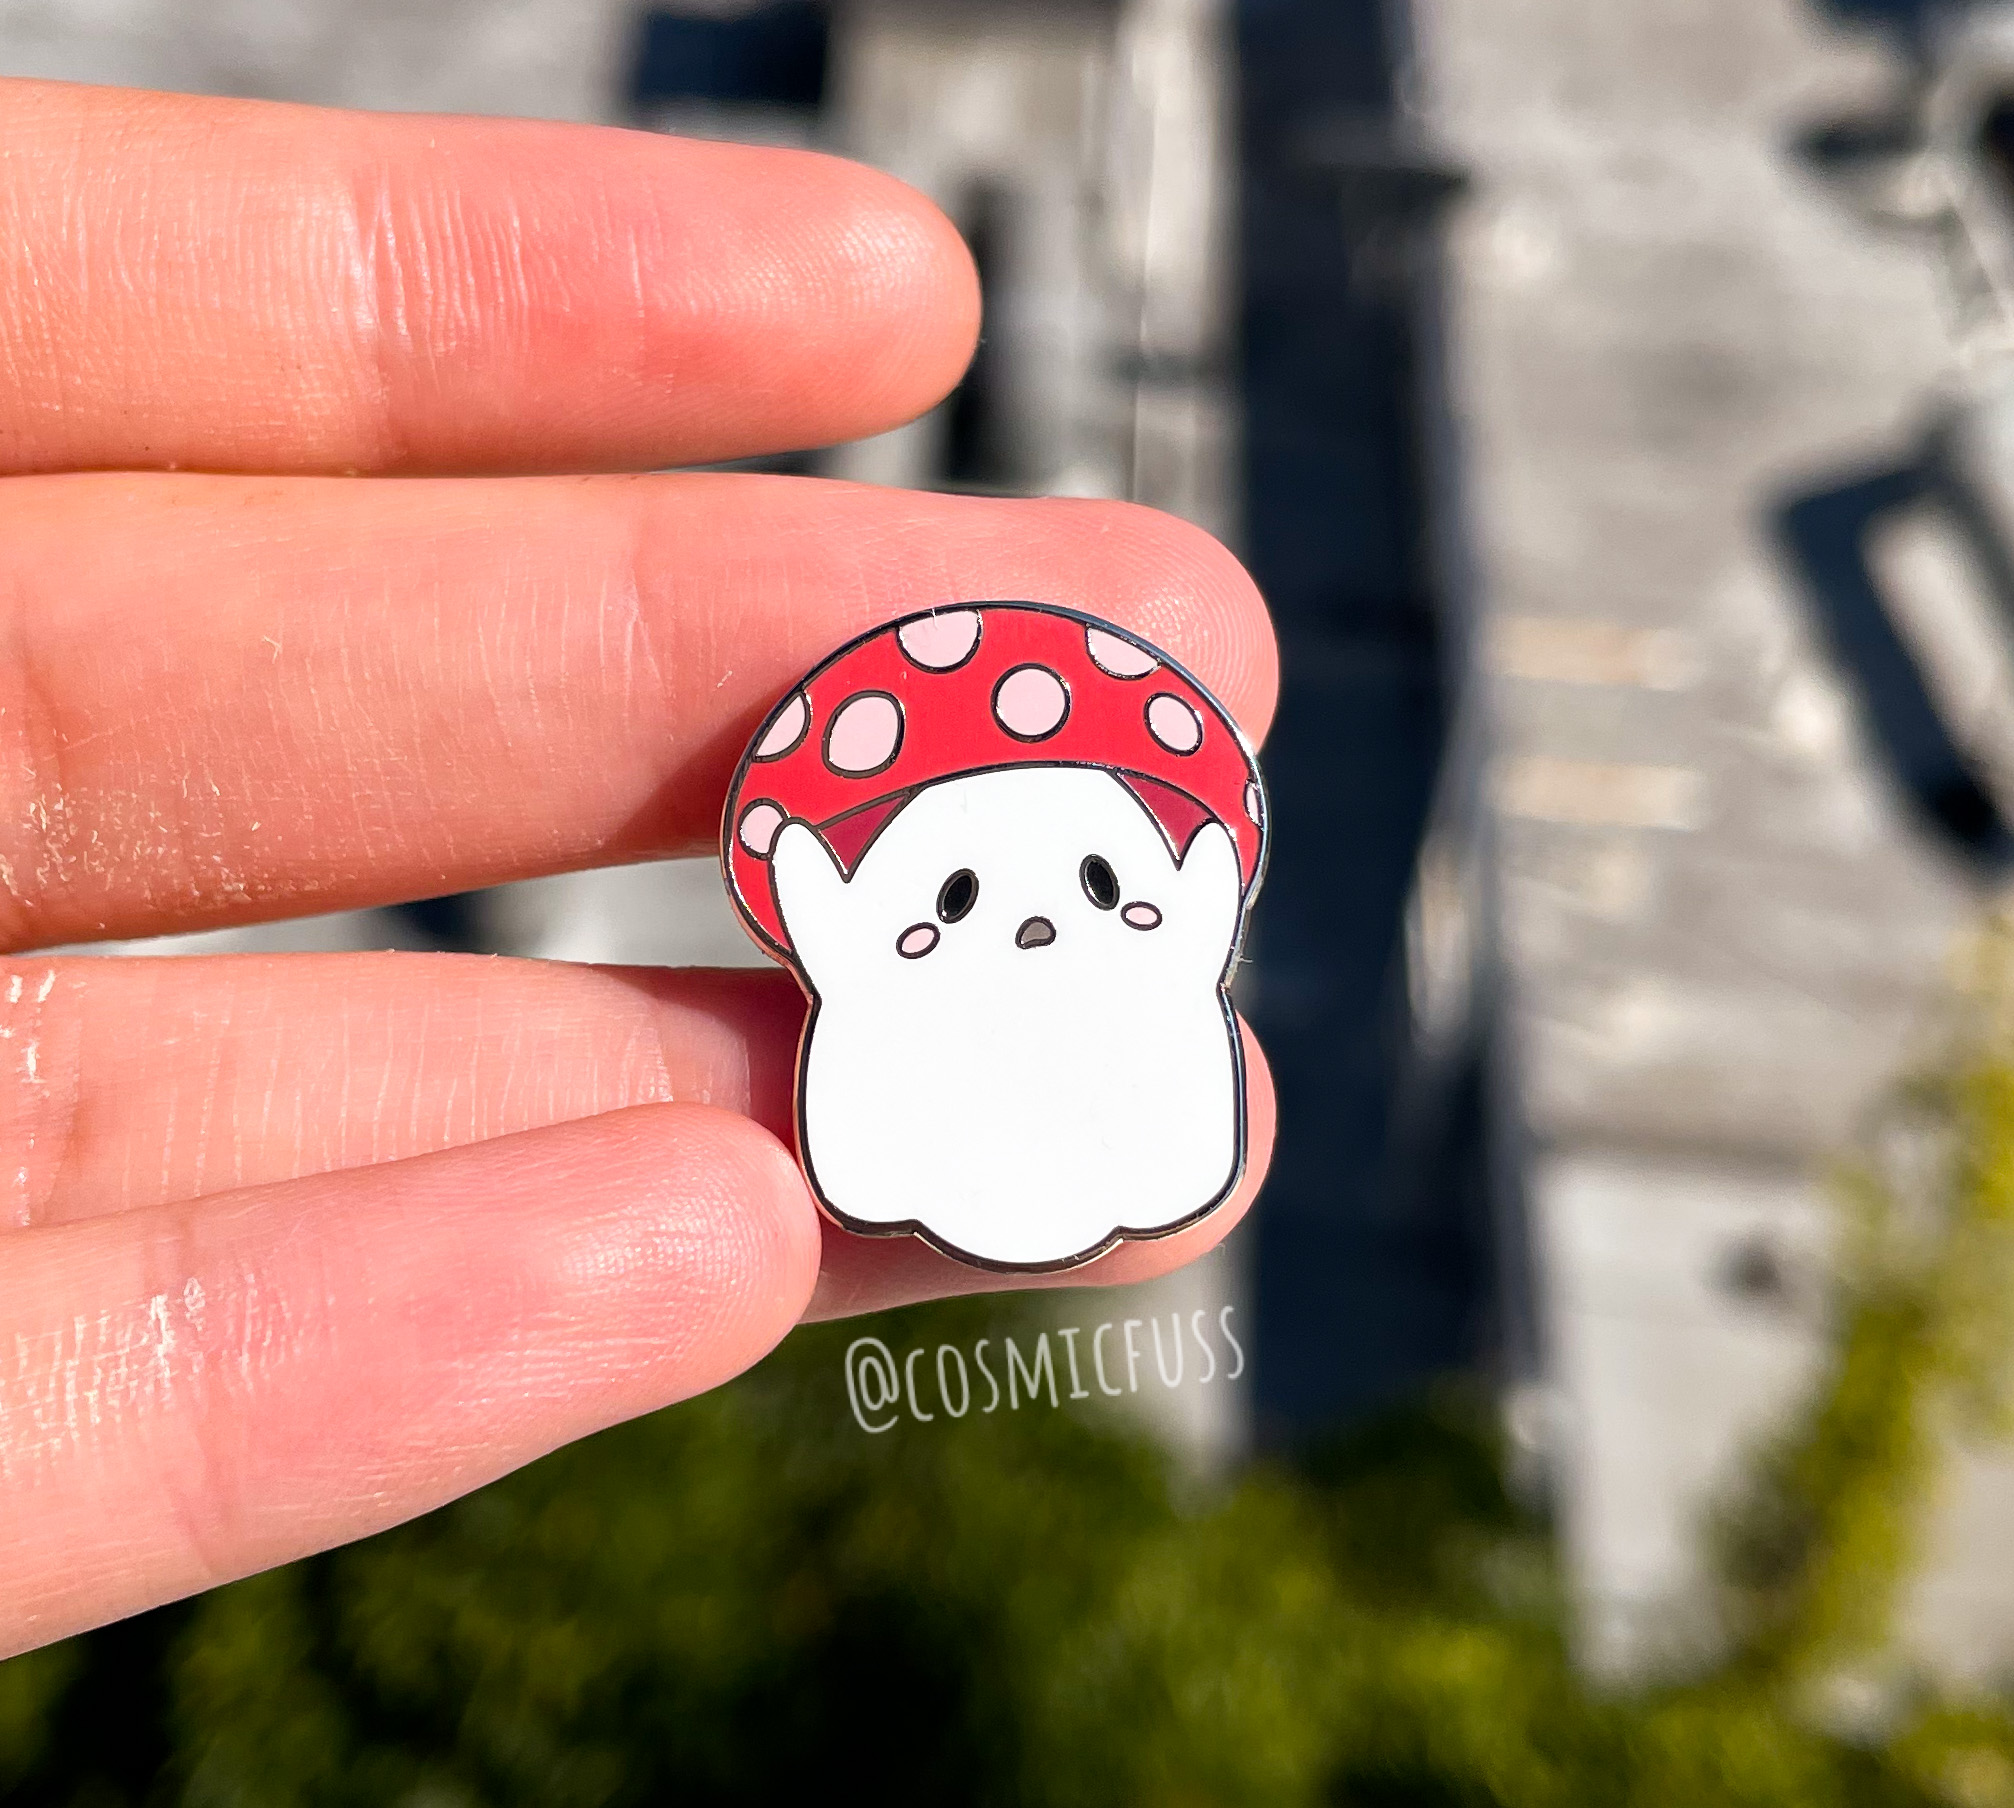 Mushroom Ghostie Pin!